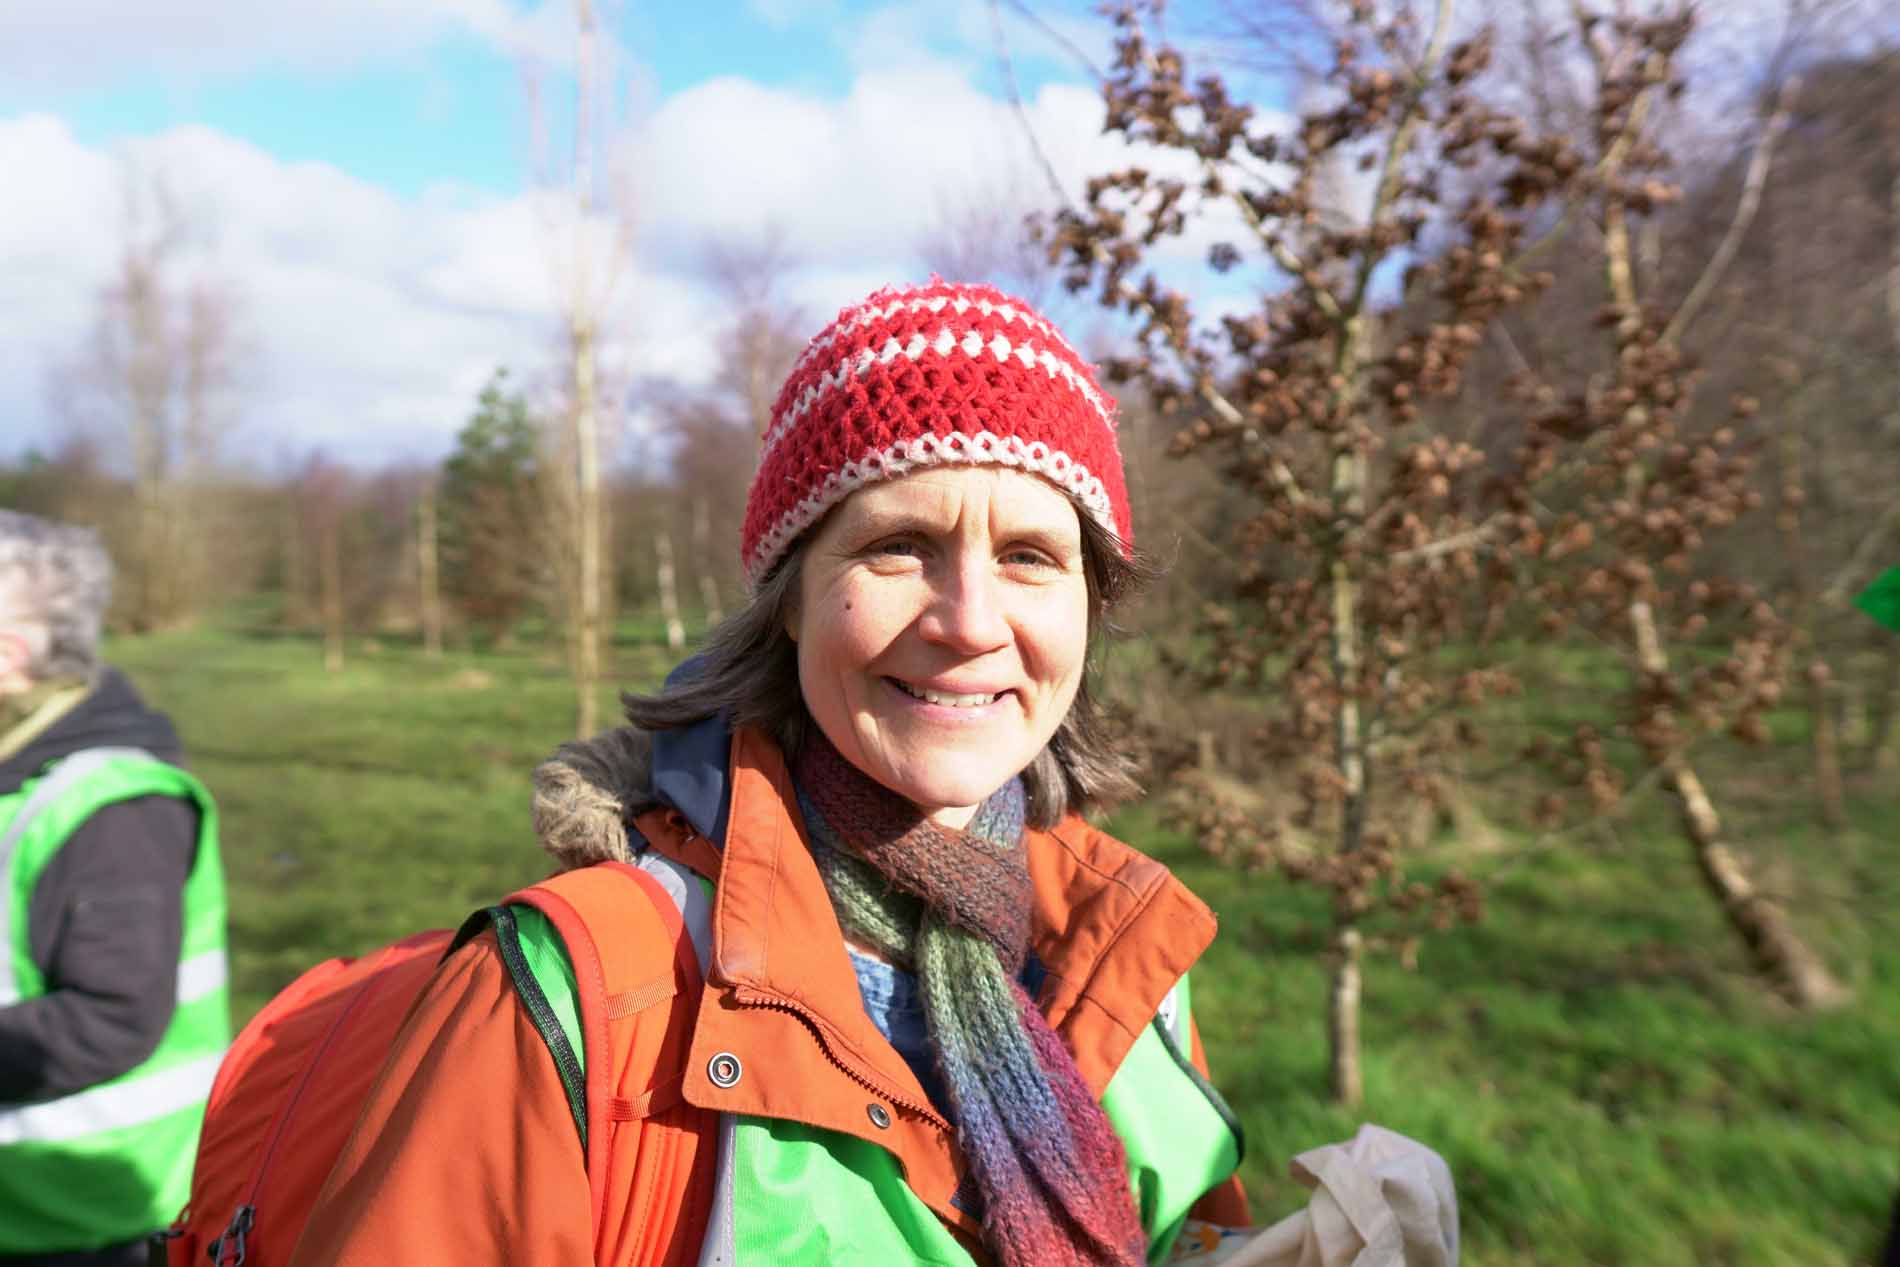 Rebecca Maunder, Coordinator of the Harrogate and Knaresborough Green Party